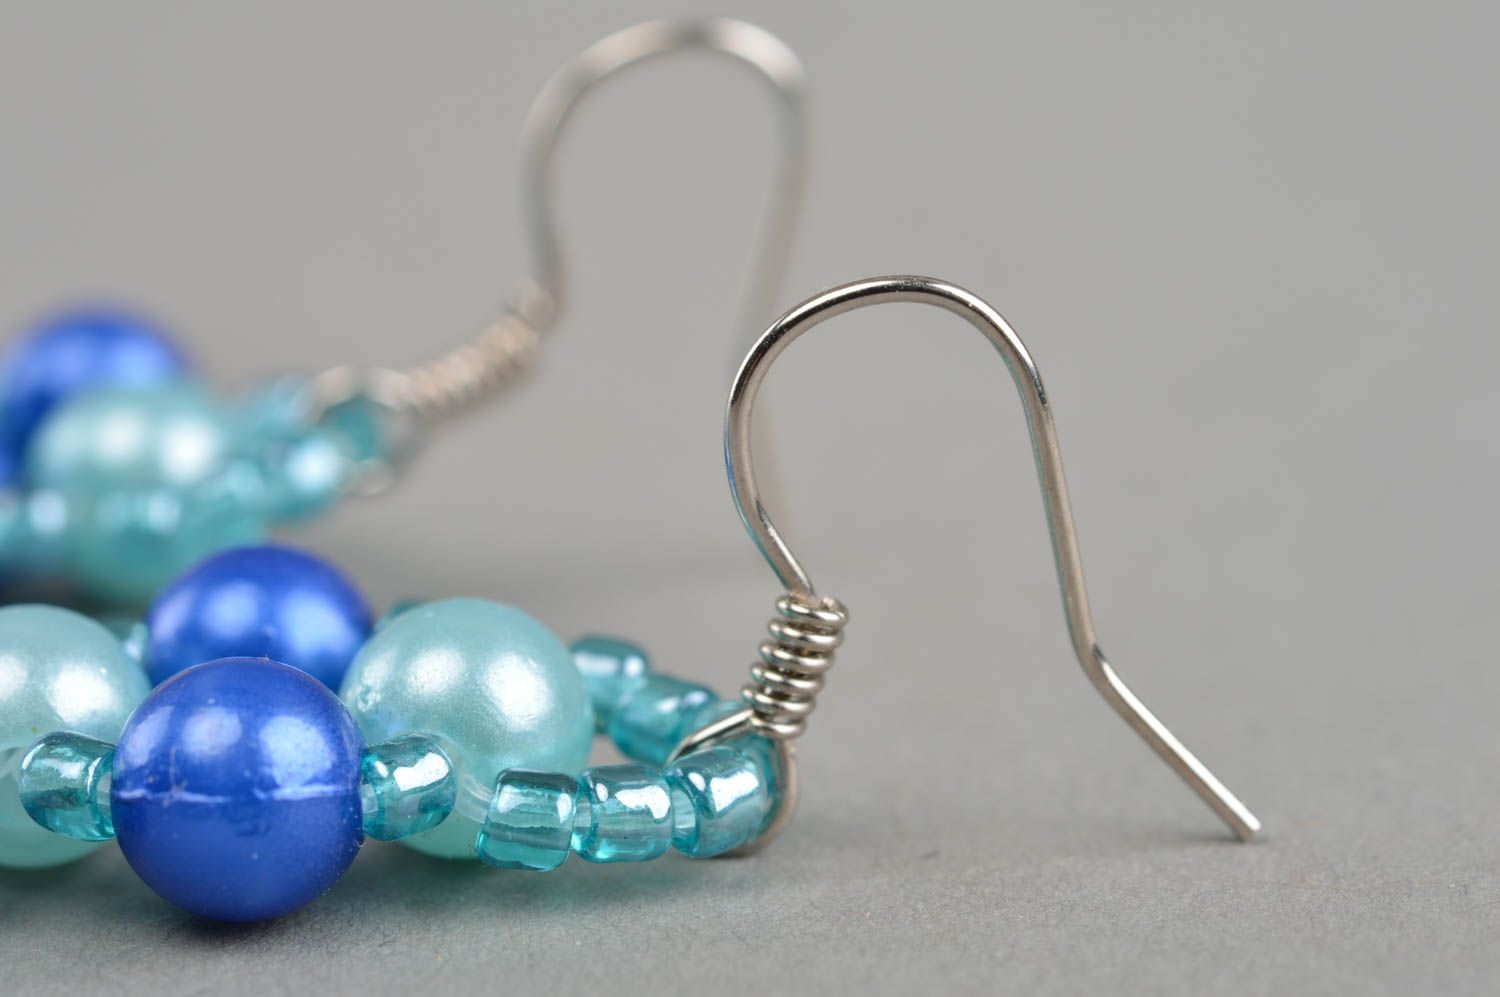 Unusual handmade beaded earrings designer jewelry for women gifts for her photo 4